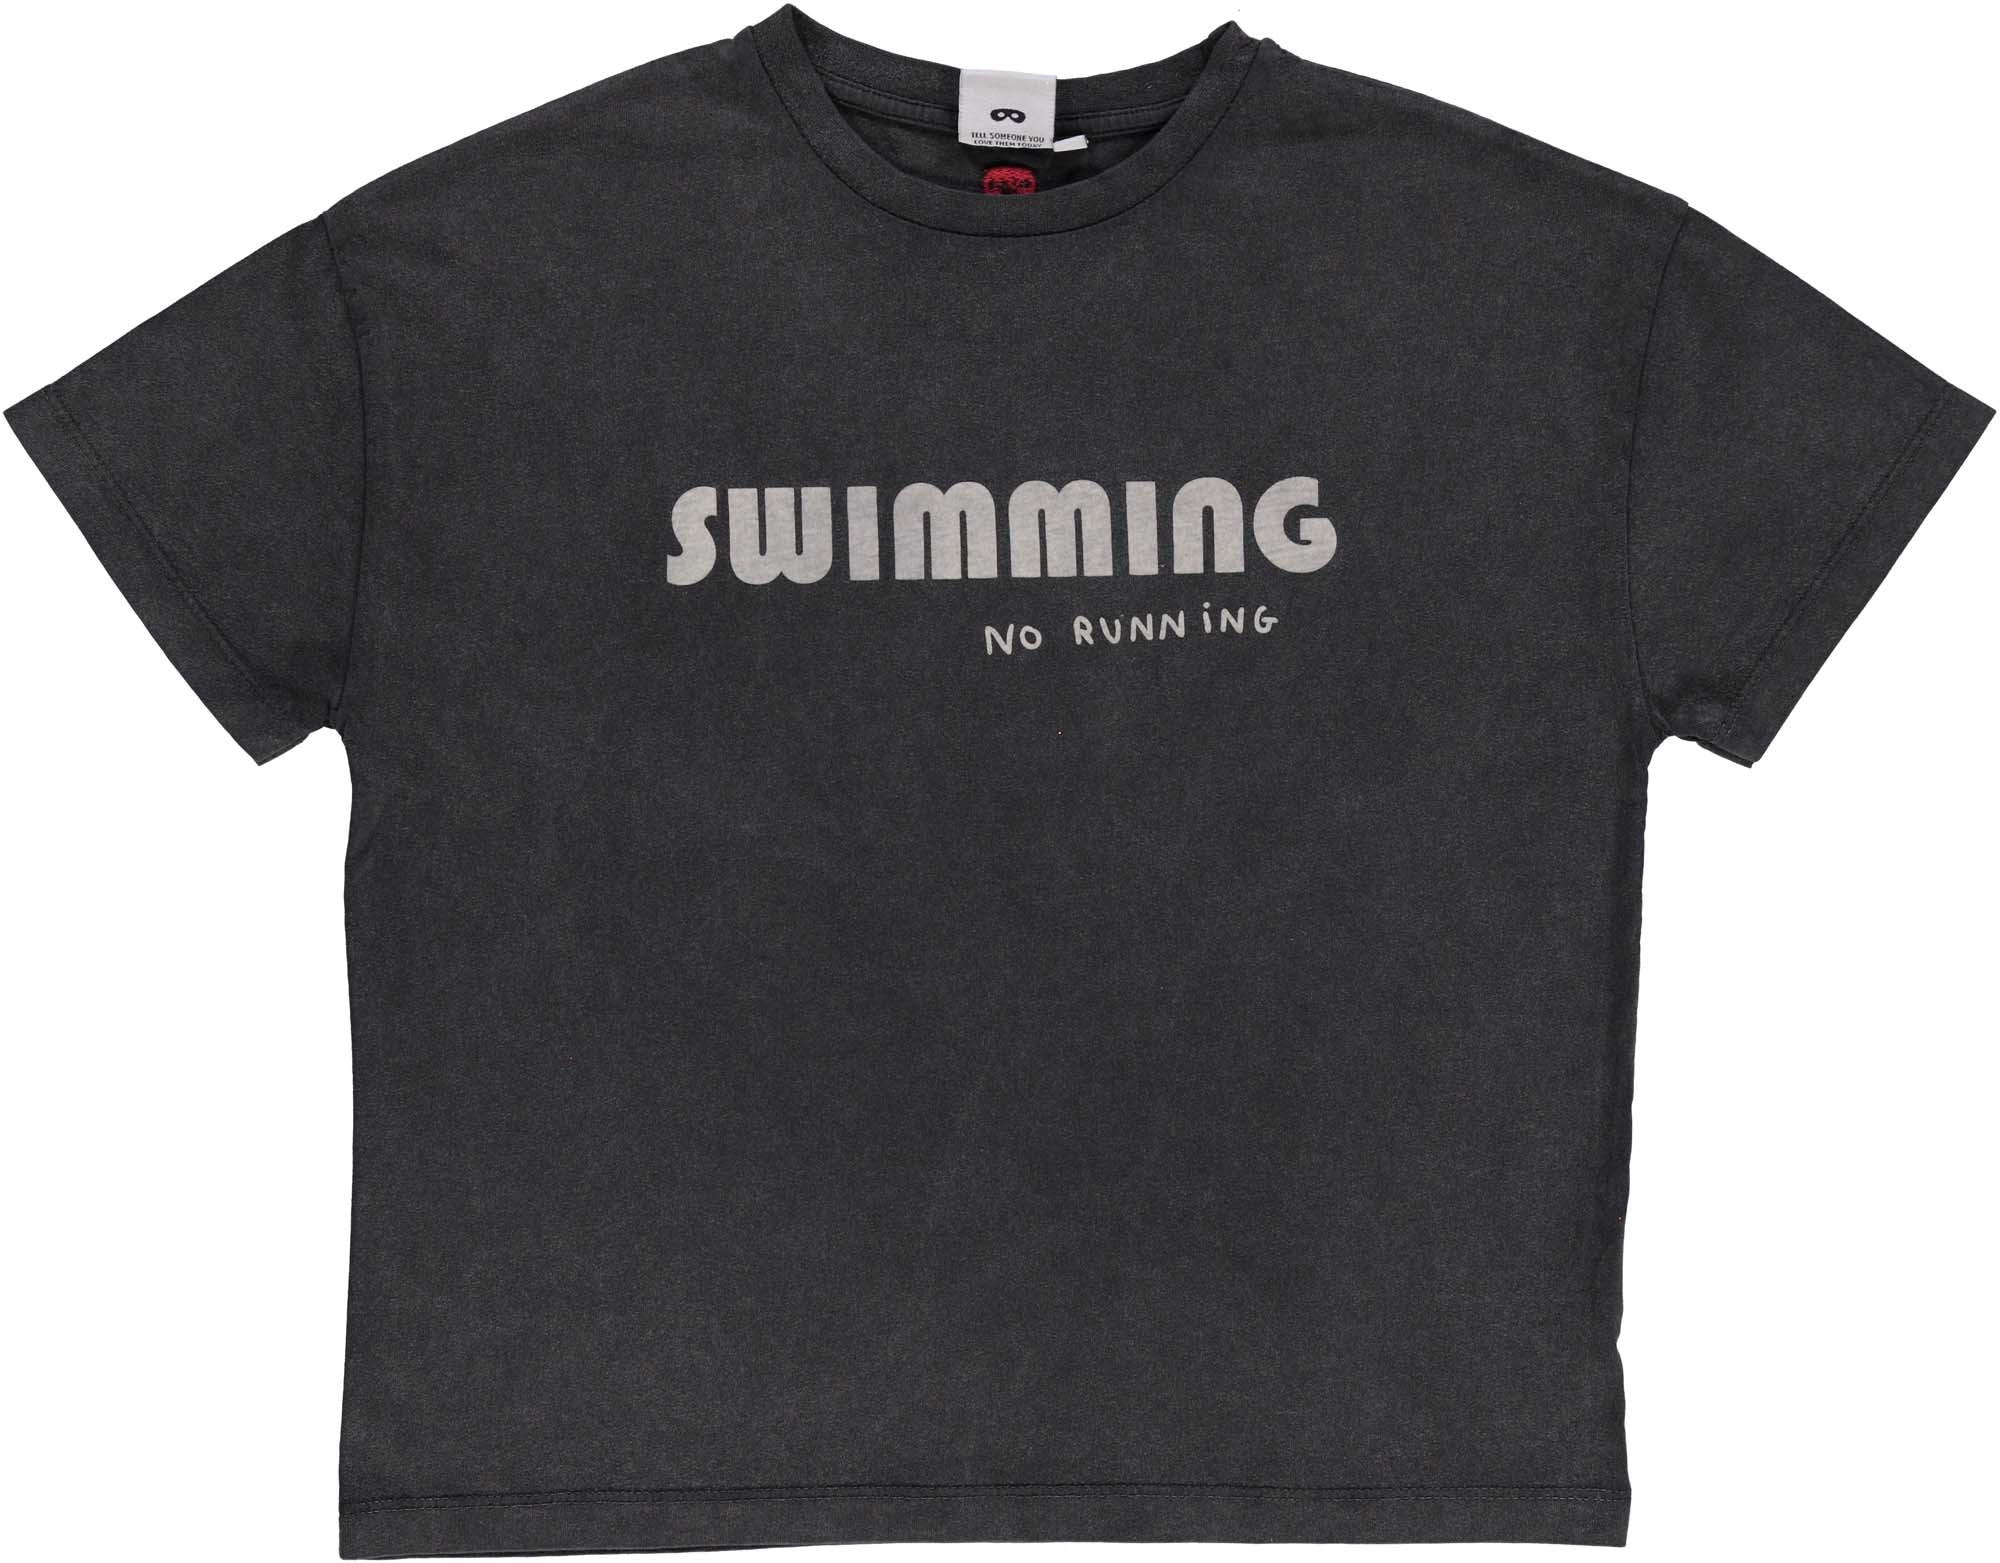 Black 'Swimming' T-shirt BL024